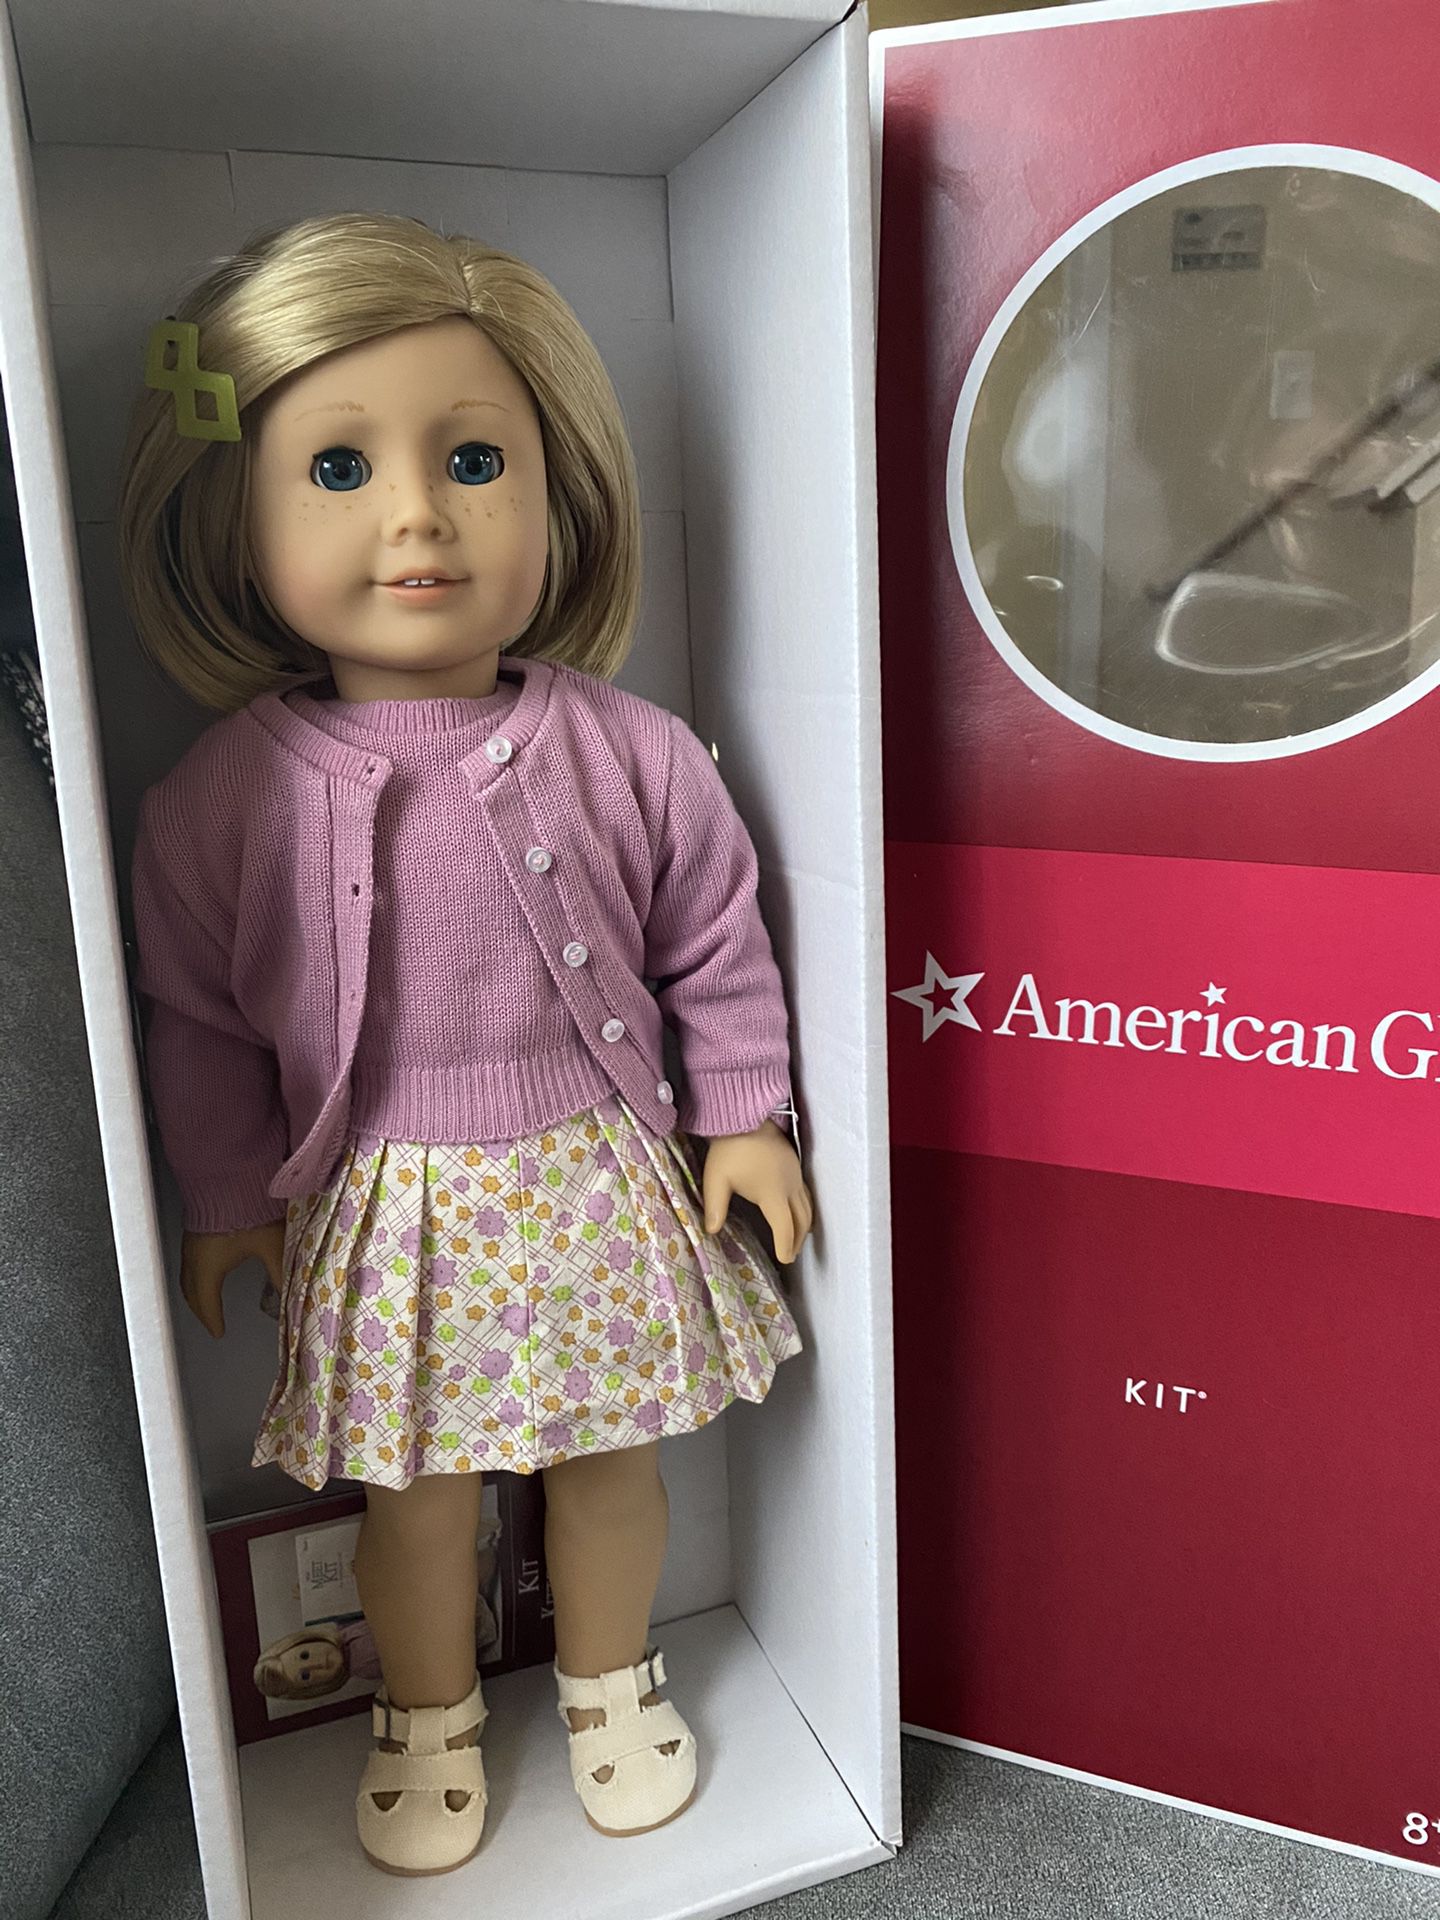 American girl doll kit